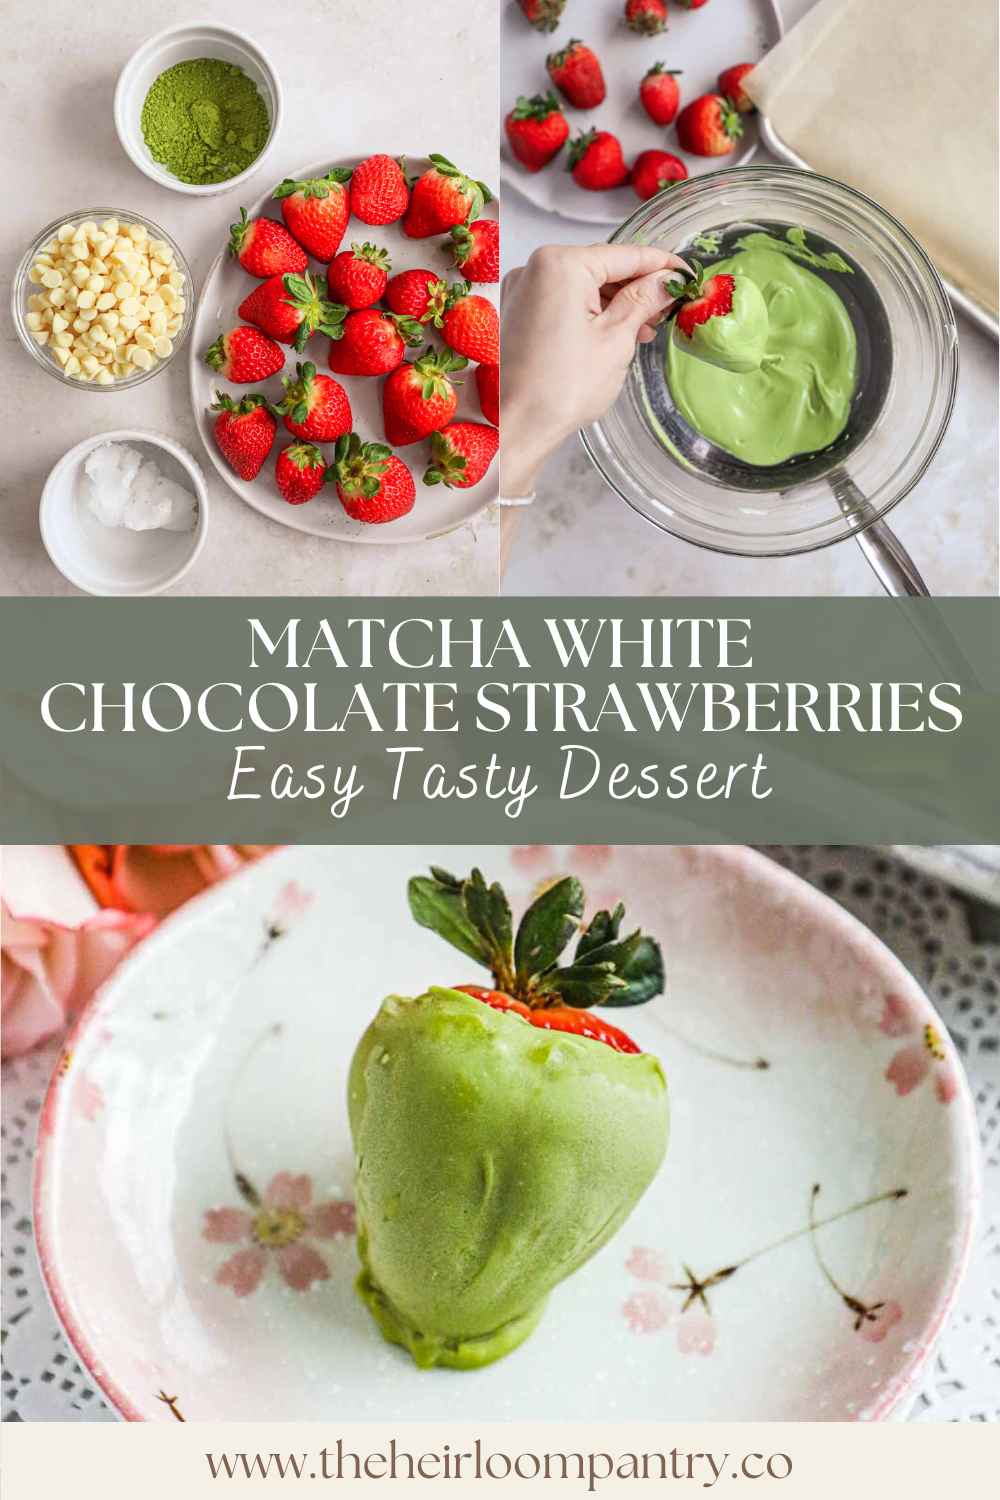 Matcha white chocolate dipped strawberries Pinterest pin.